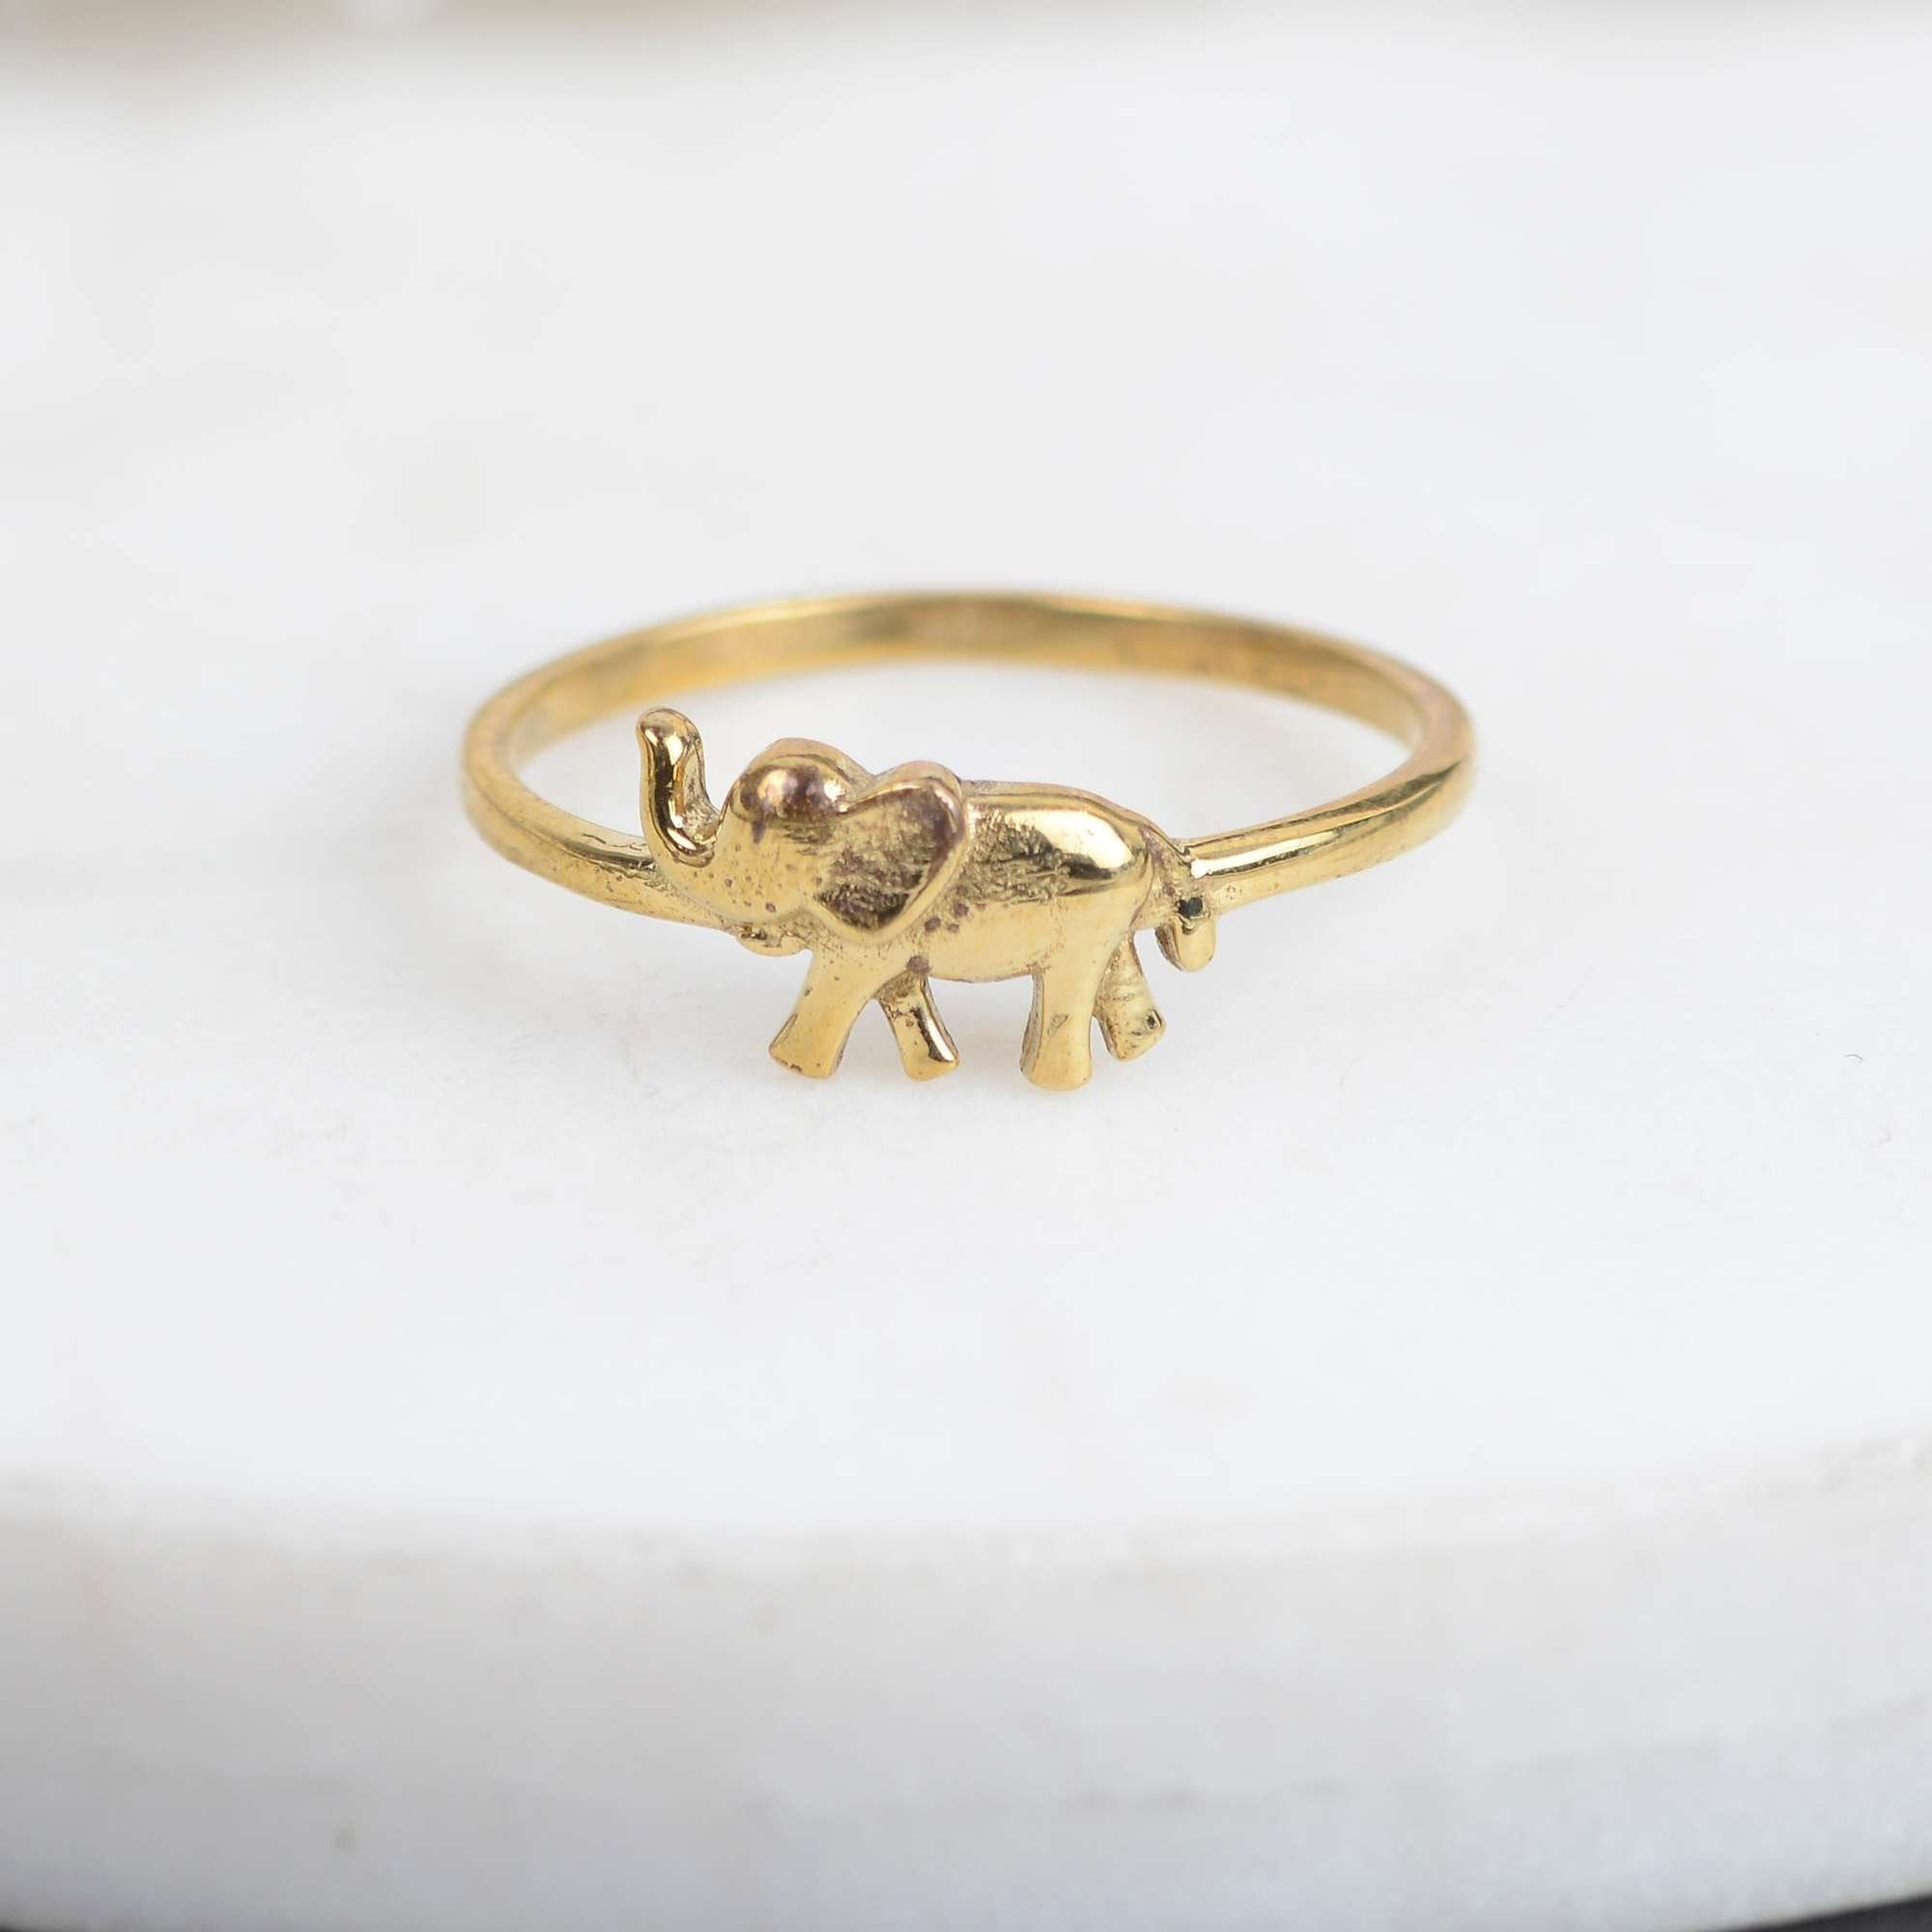 Buy Gold Ring For Men Online | Latest Gents Gold Ring Designs | AJS Making  Charges Making Charges